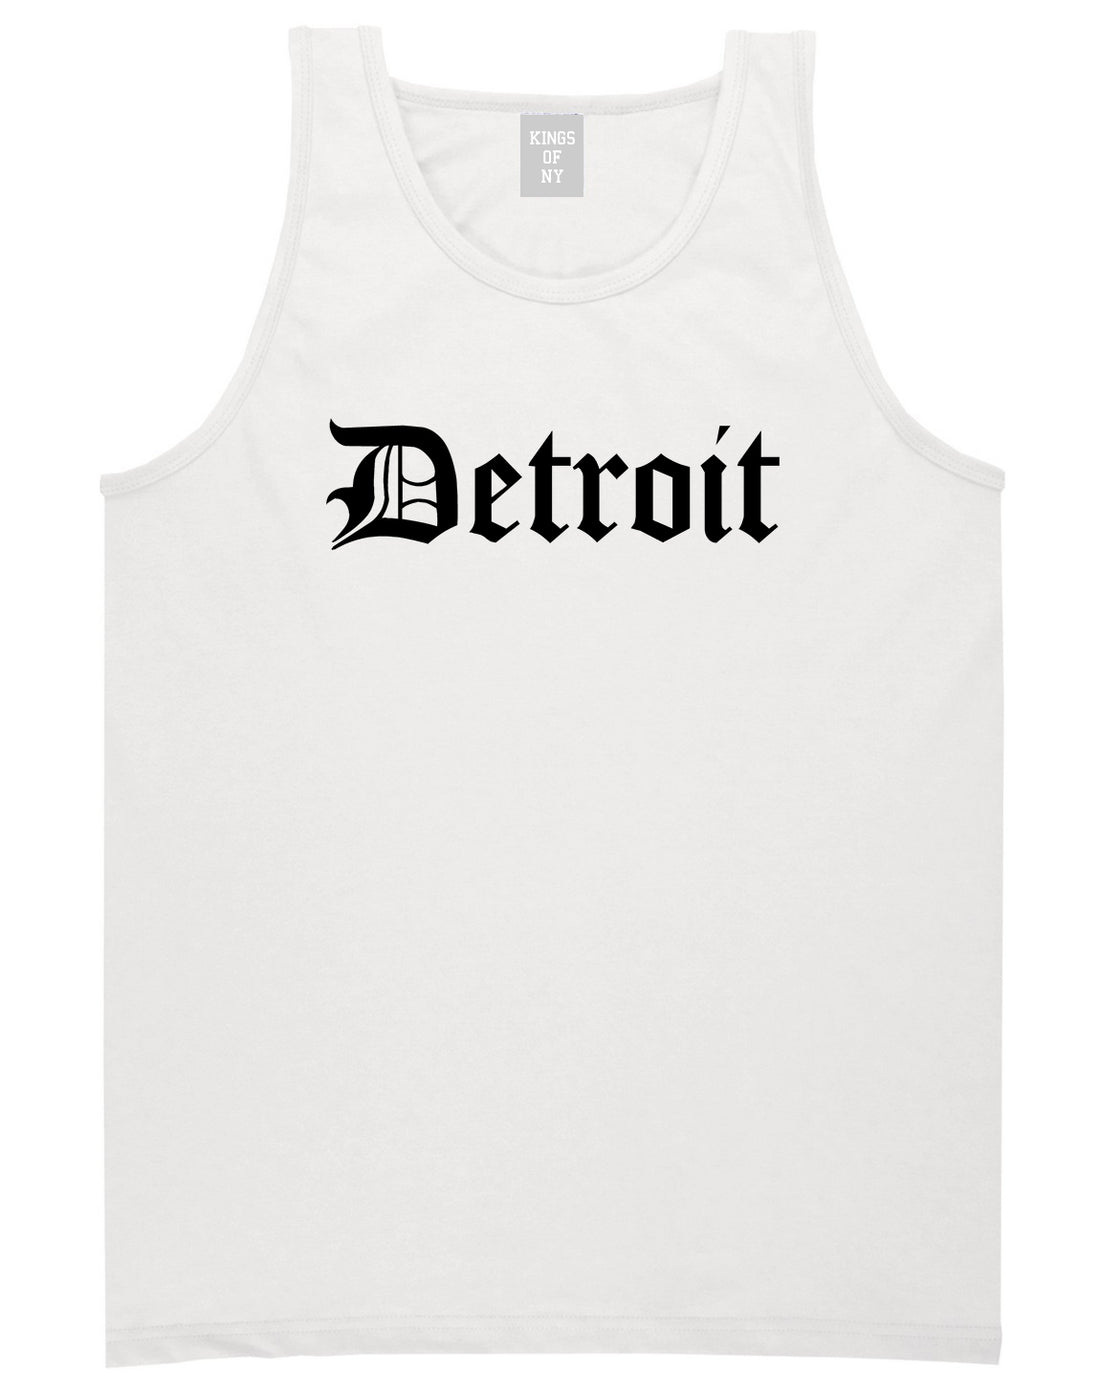 Detroit Old English Mens Tank Top T-Shirt White